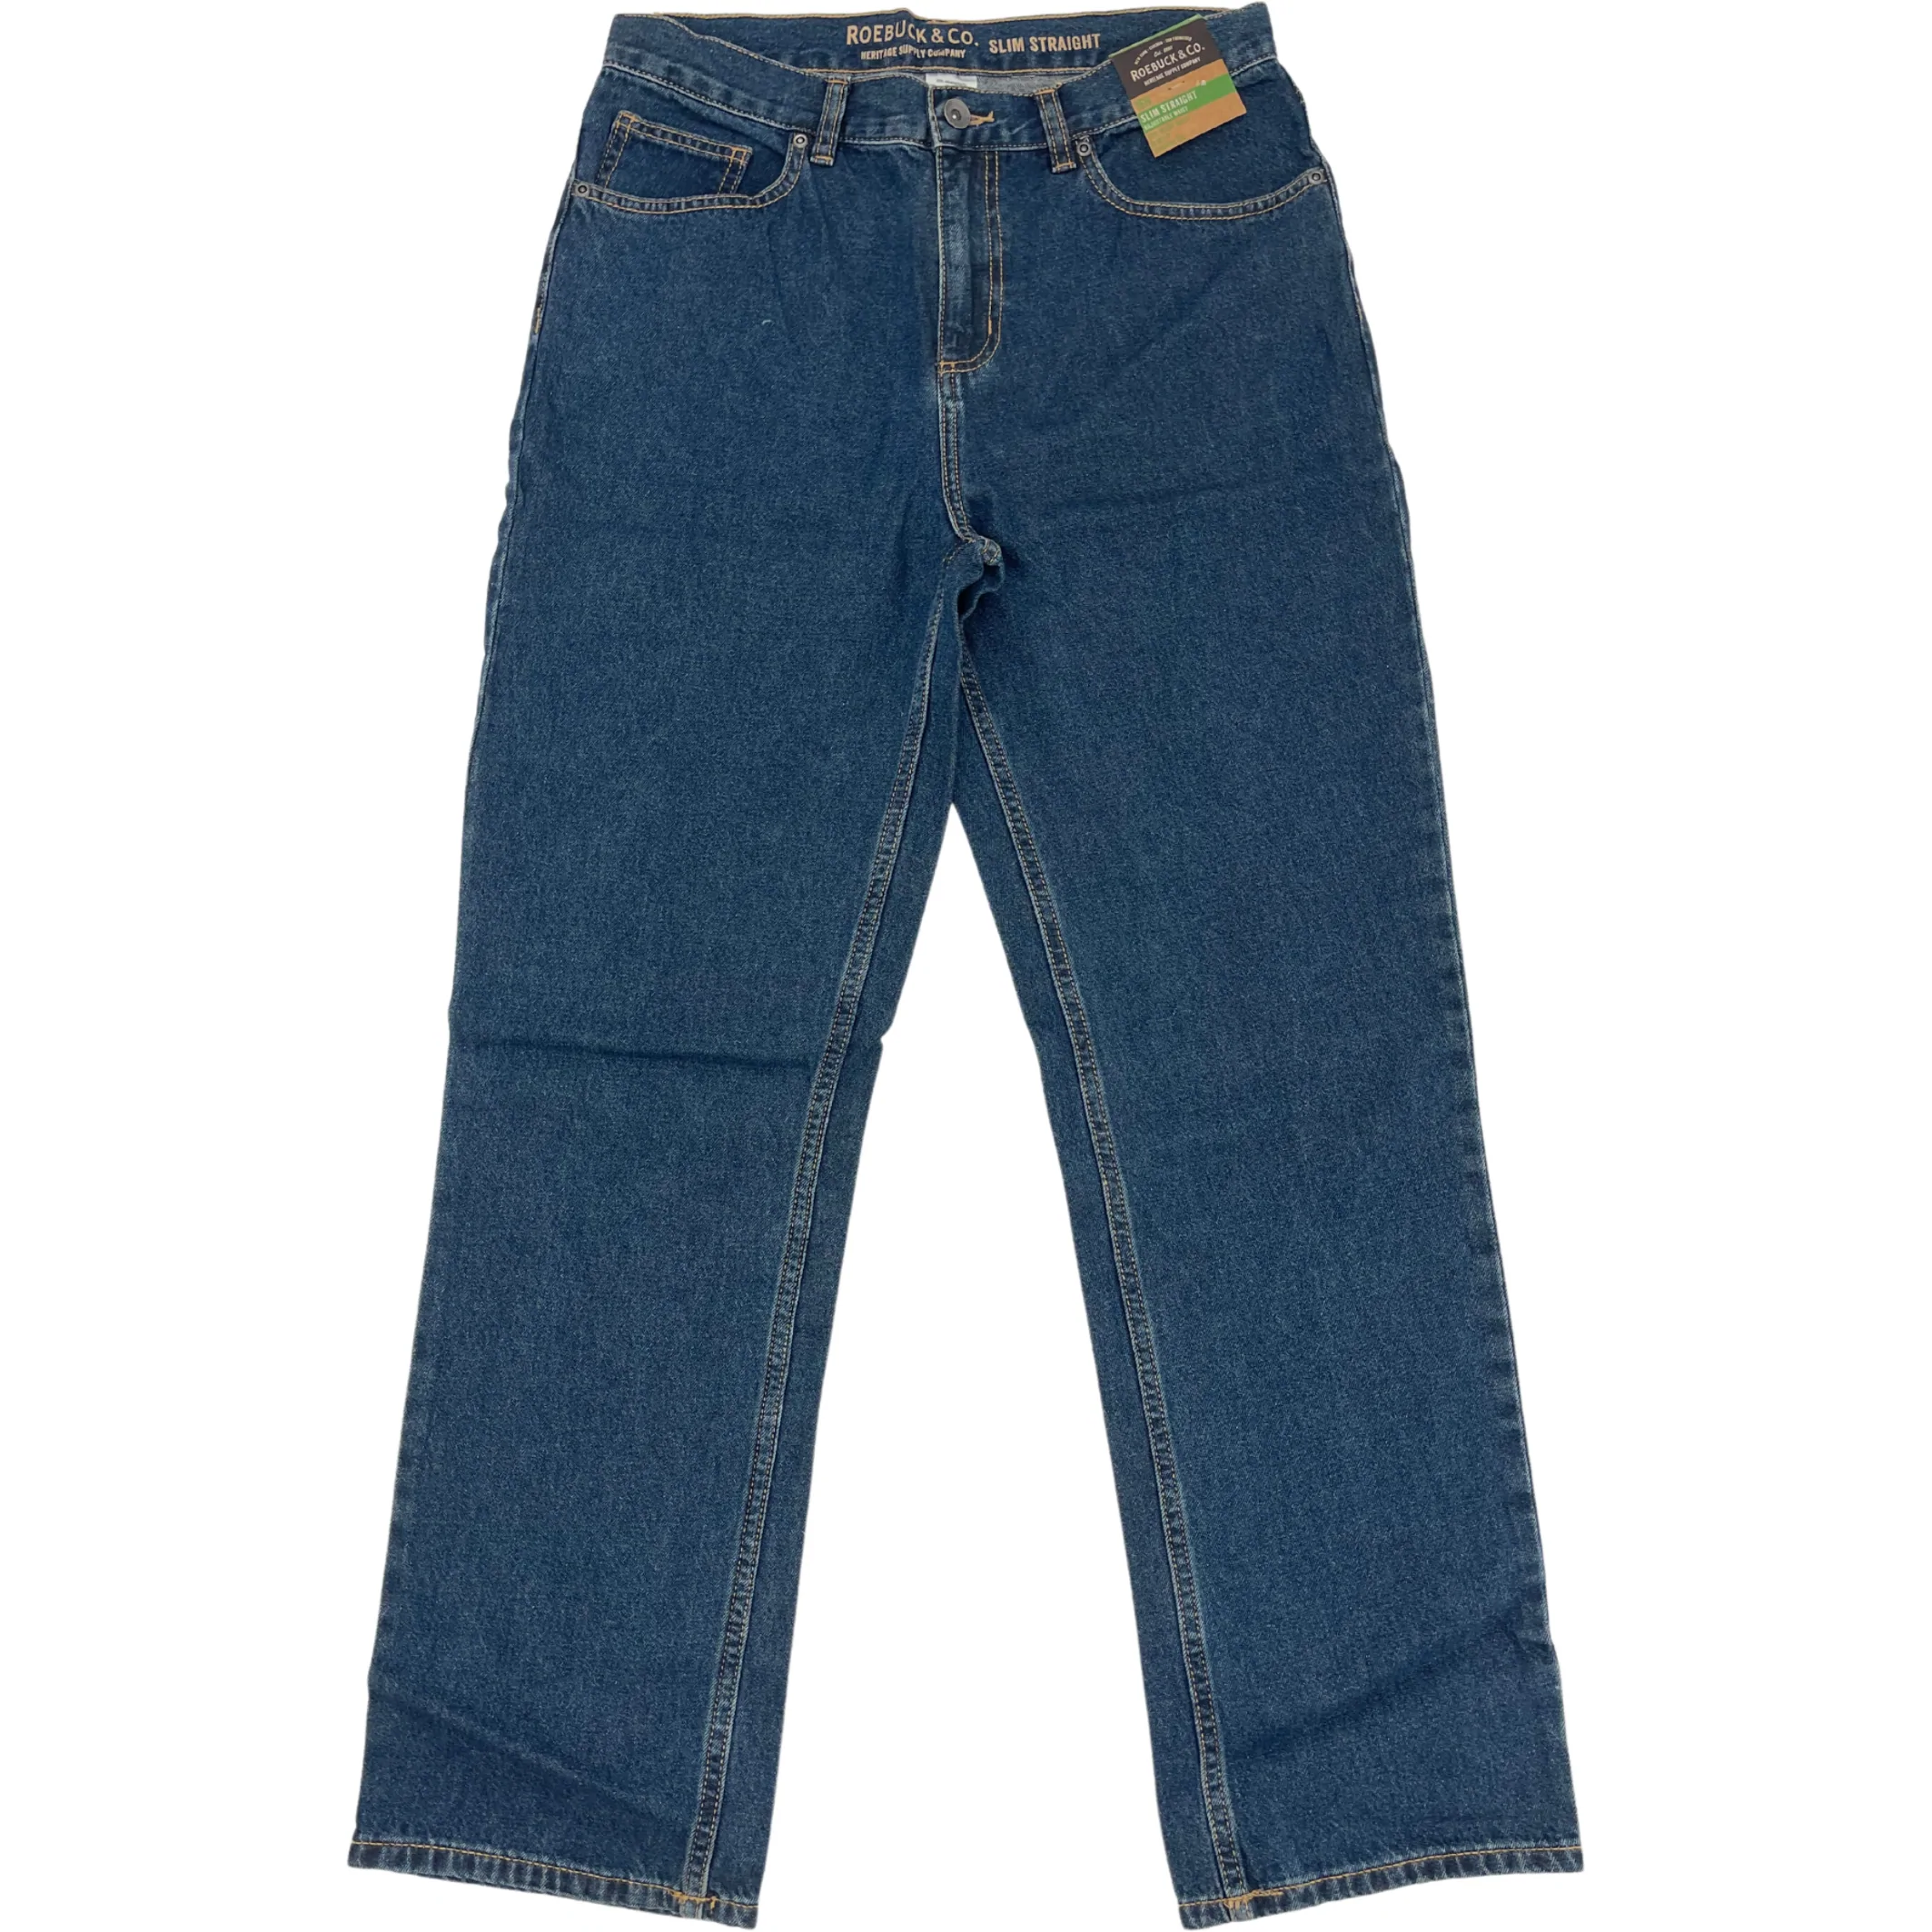 Roebuck & Co. Boy's Jeans / Slim Straight / Regular Wash / Adjustable Waist / Size 16H